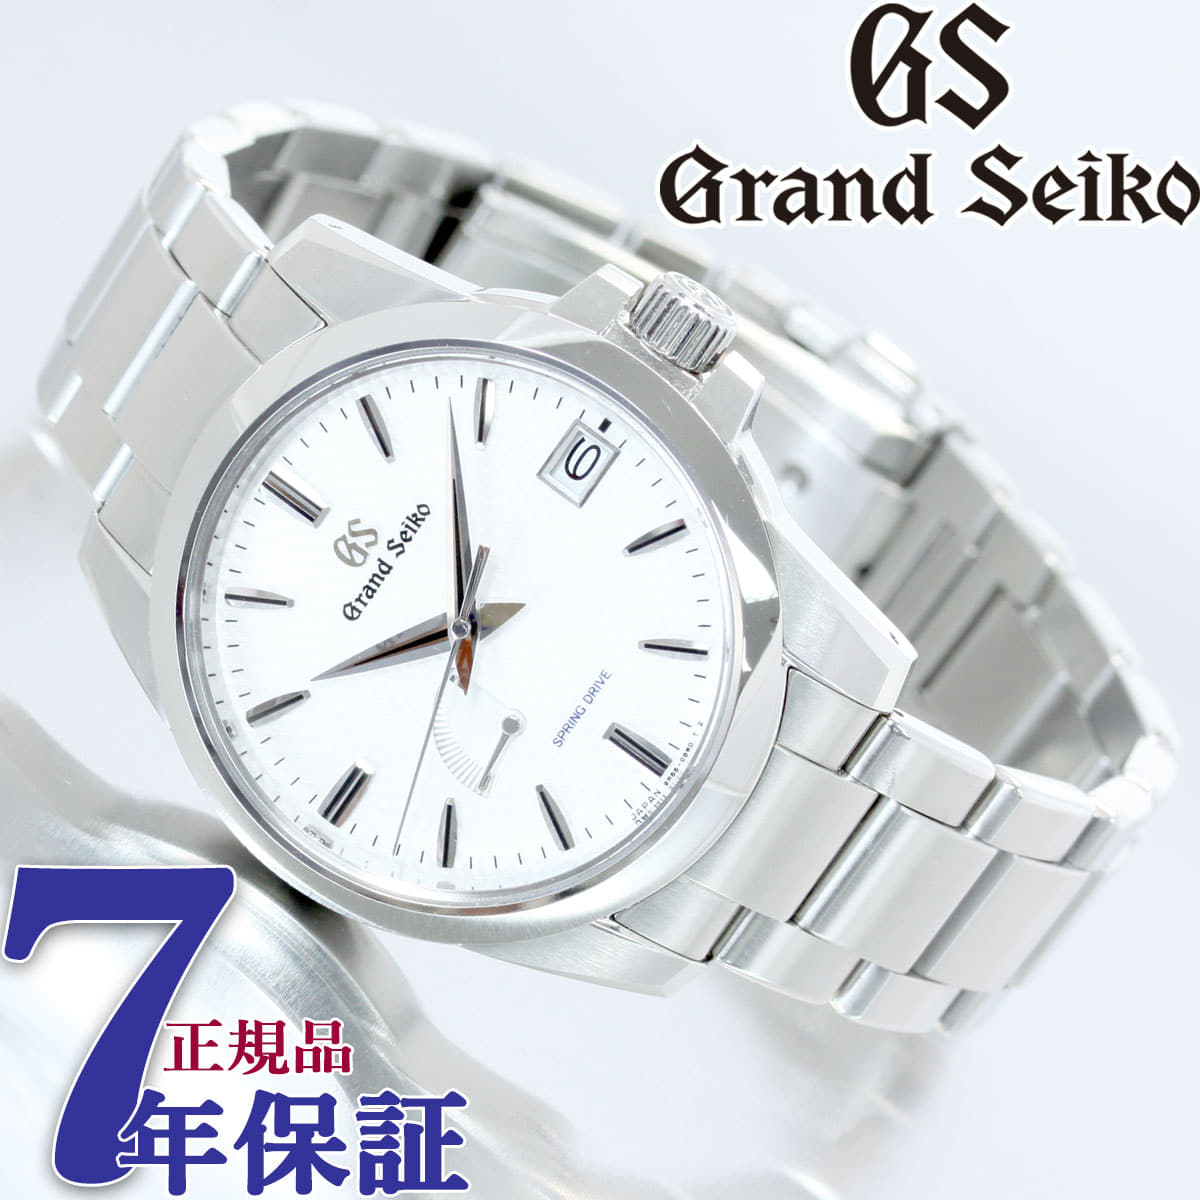 New]Grand SEIKO spring drive SEIKO watch mens GRAND SEIKO clock SBGA225 -  BE FORWARD Store